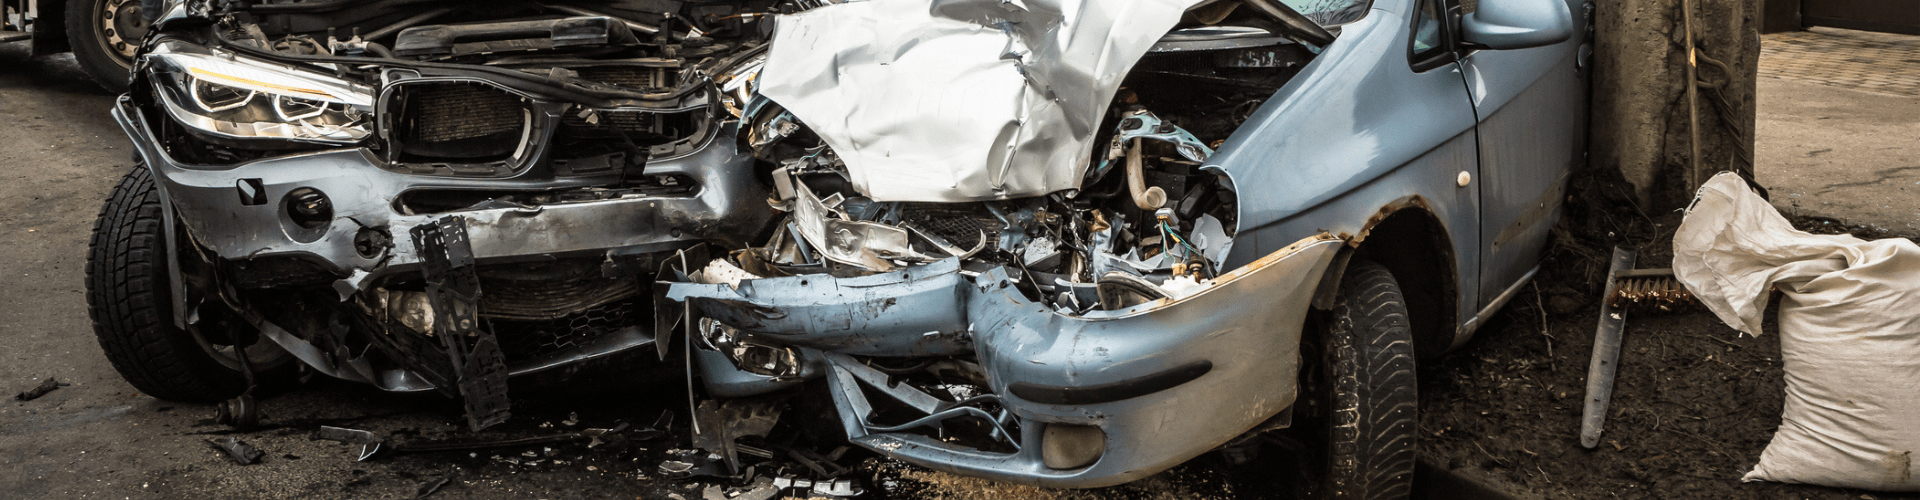 Attorney Automobile Accident